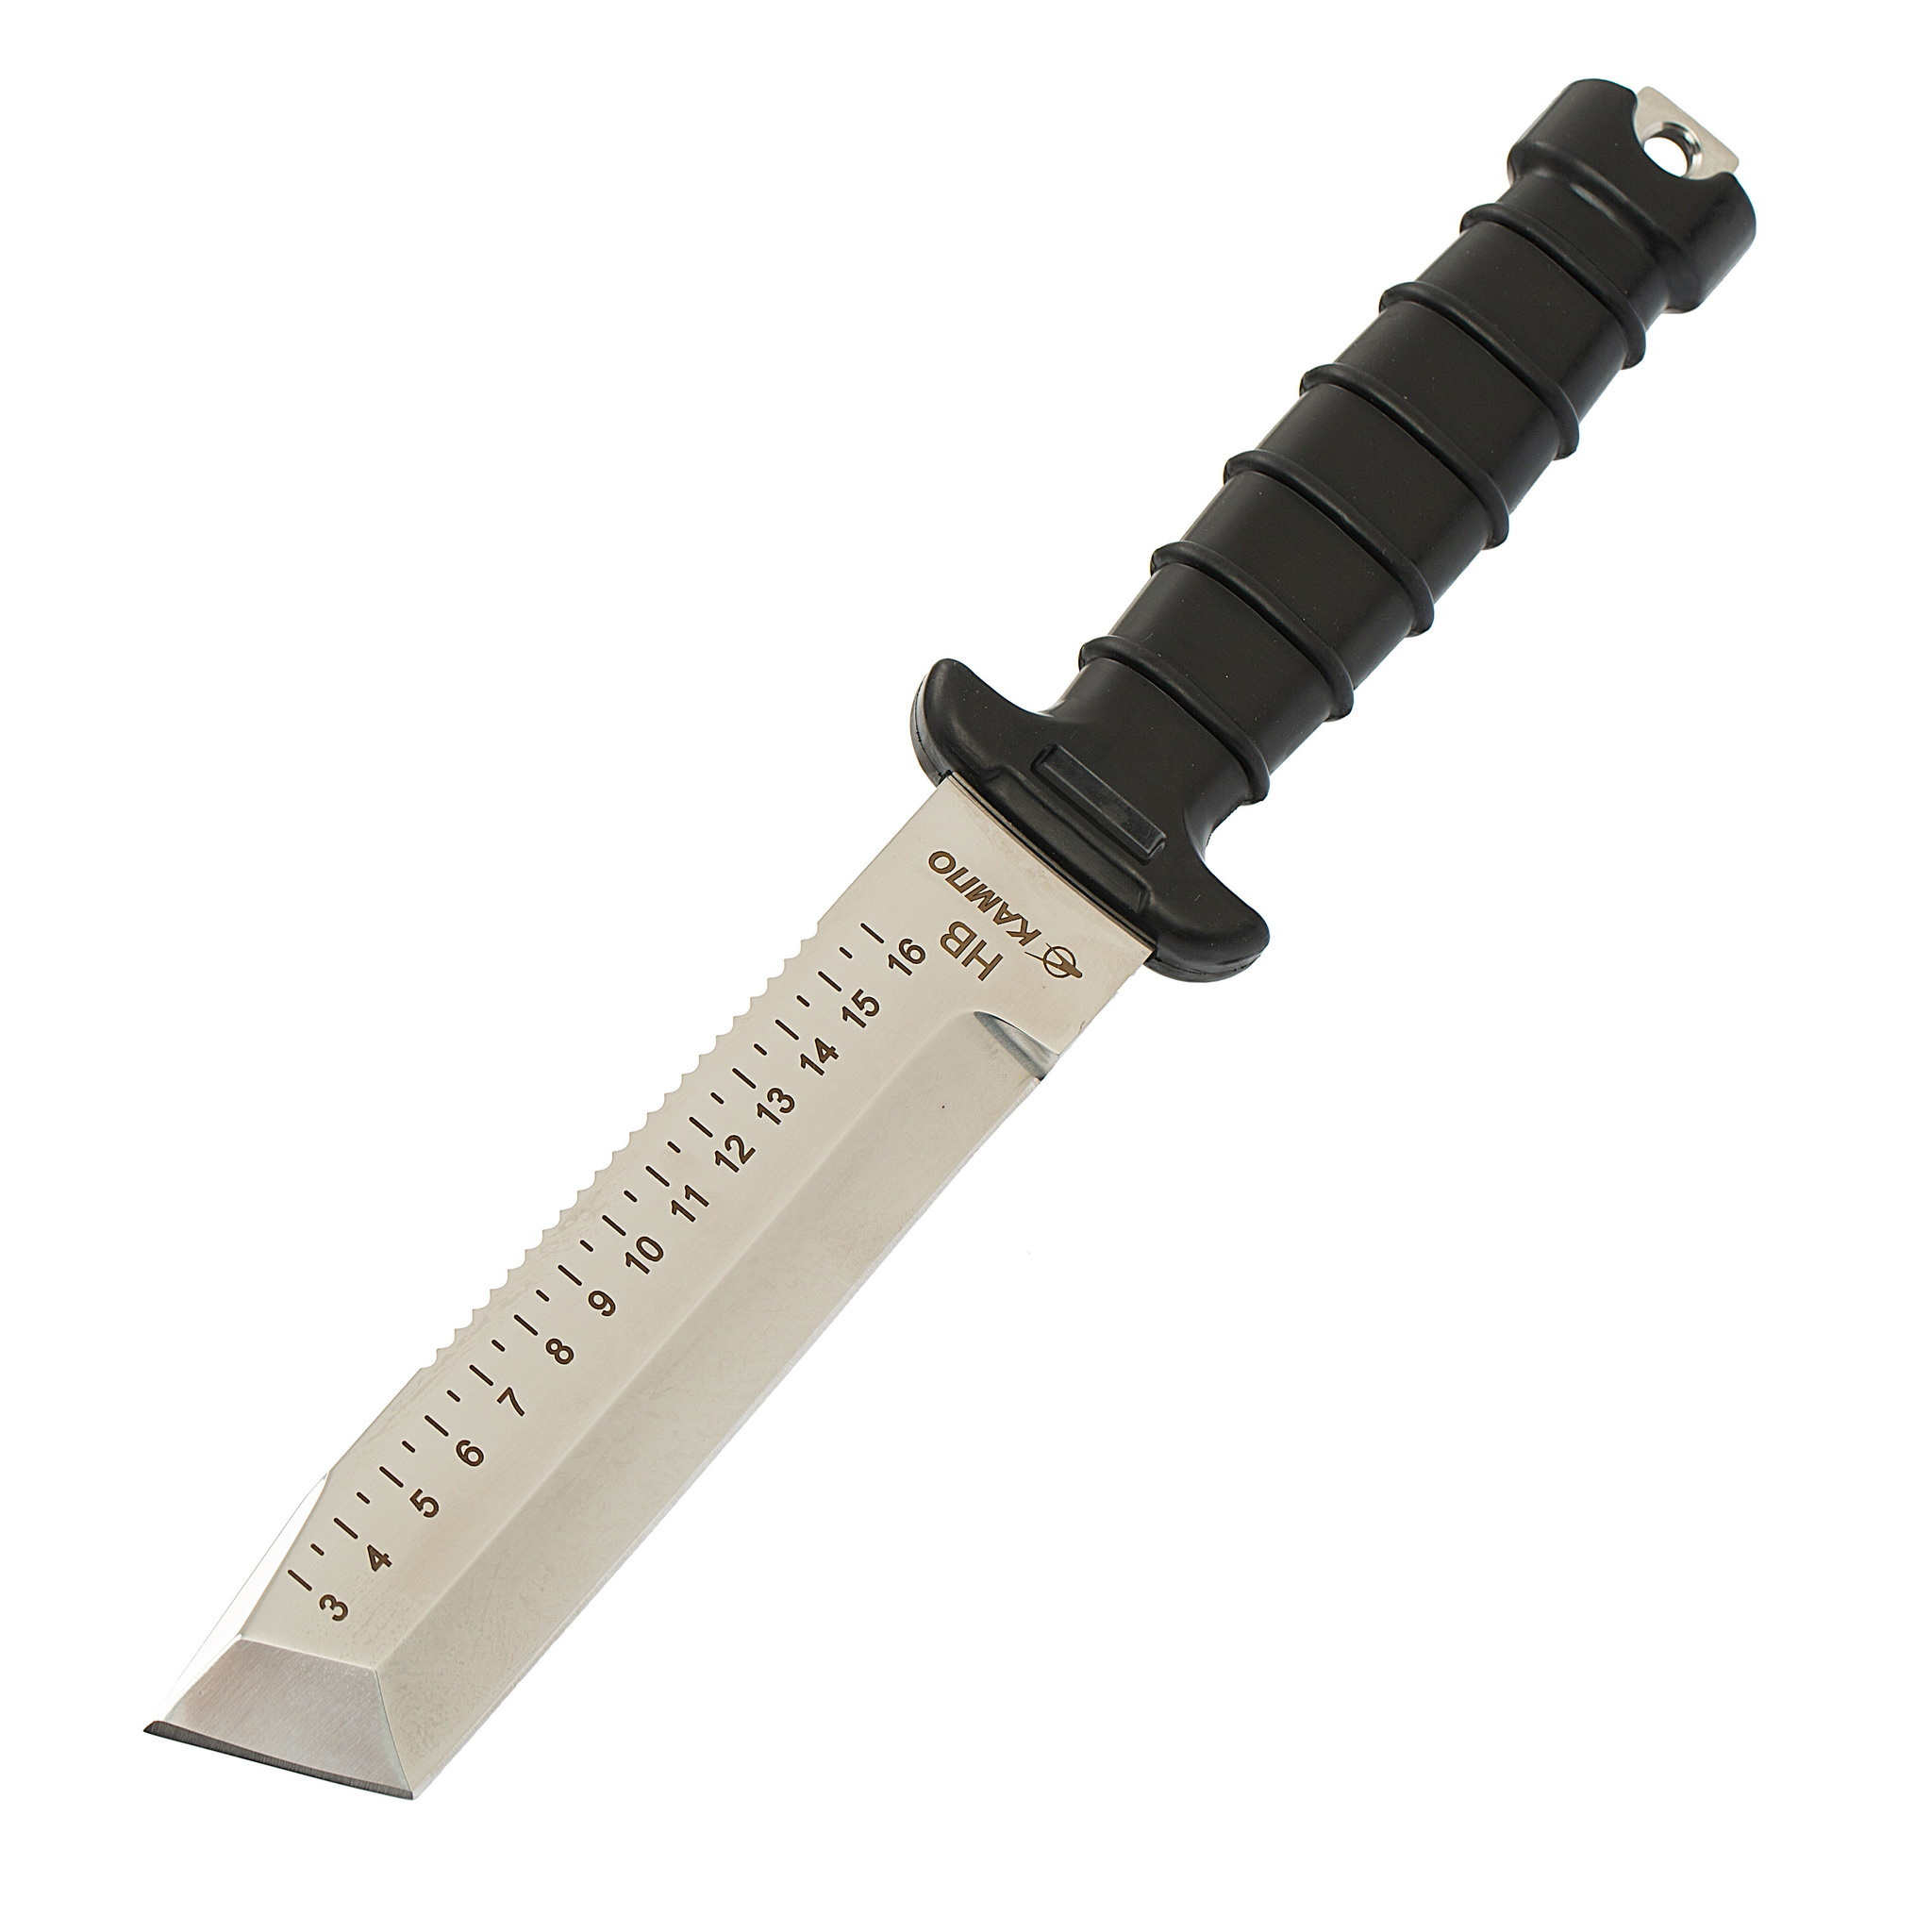 Нож водолазный НР, сталь 95х18, рукоять термоэластопласт, пластиковые ножны - фото 1